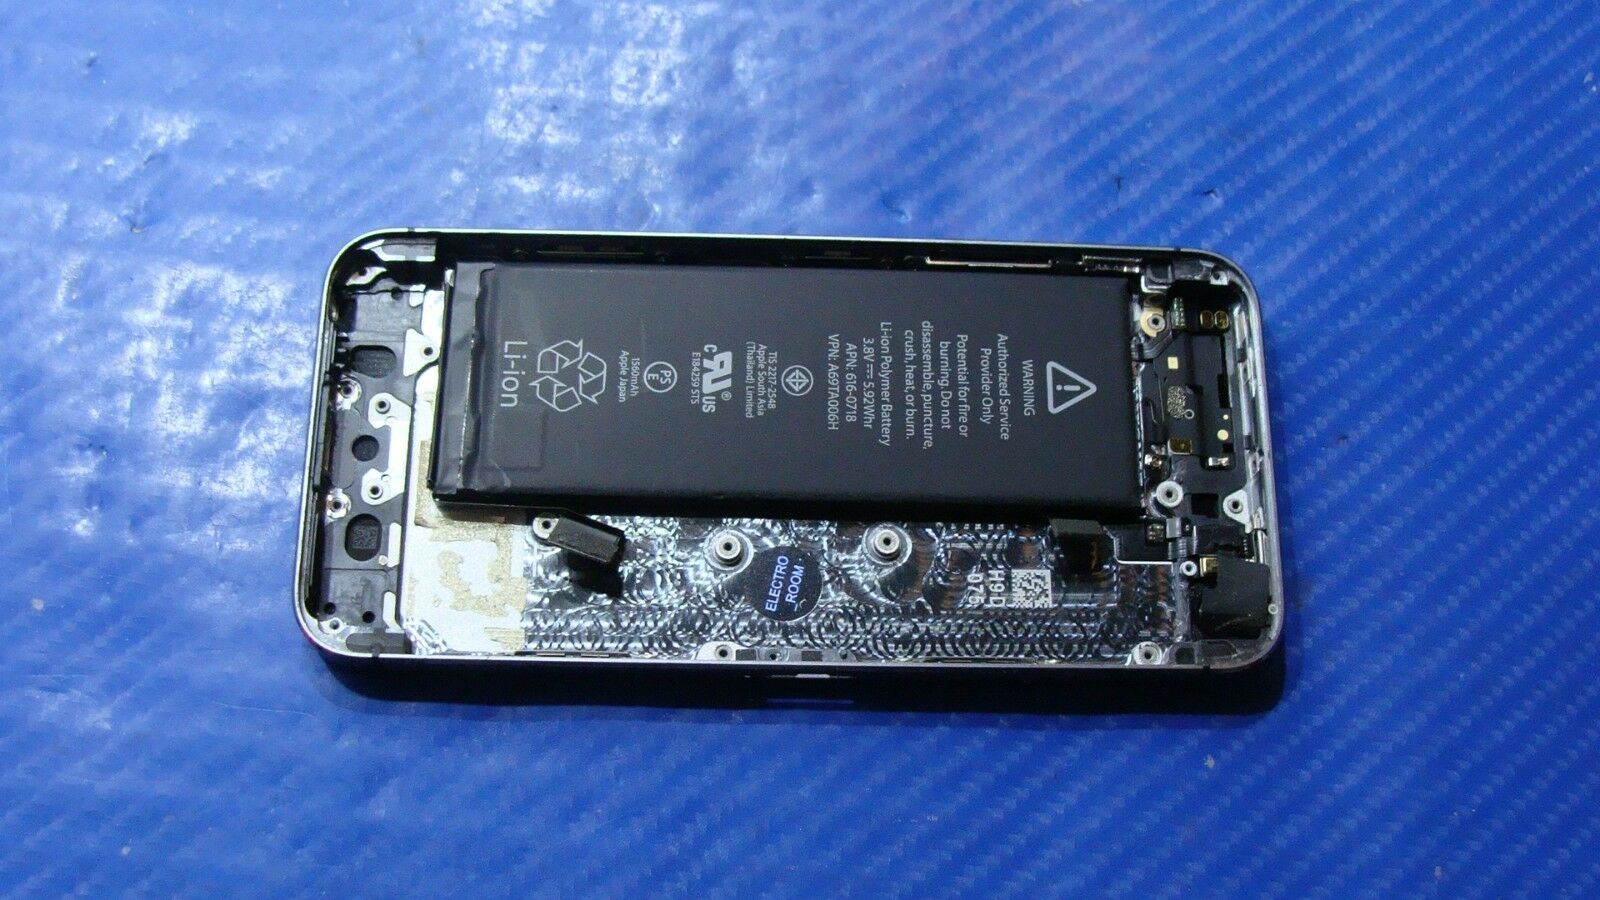 iPhone 5s Verizon A1533 ME341LL/A Late 2013 4